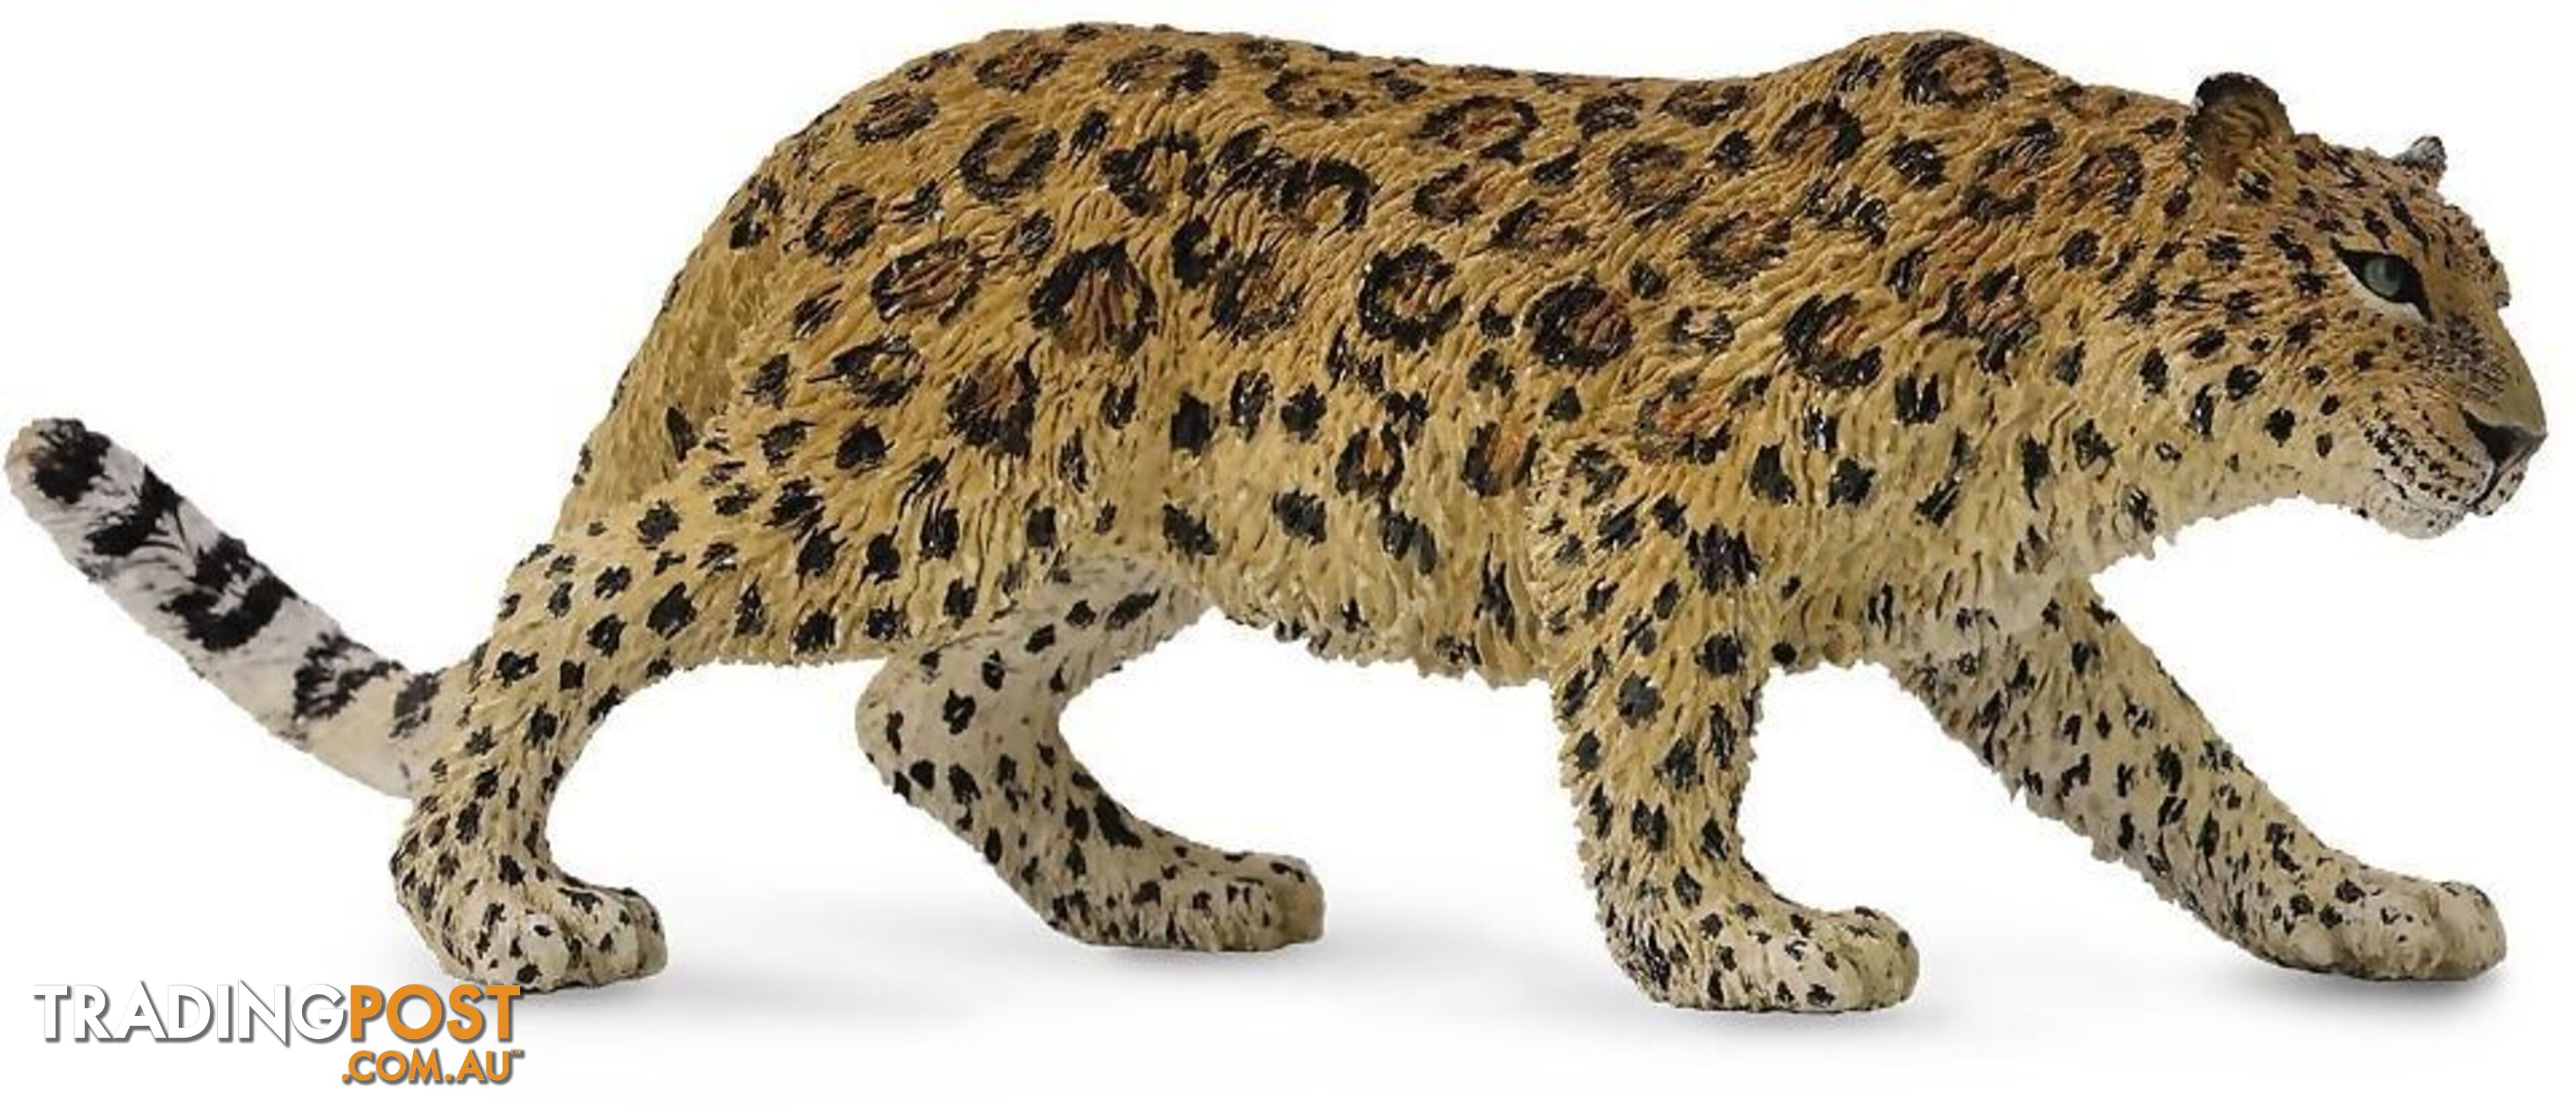 CollectA - Amur Leopard Extra Large Wild Animal Figurine - Rpco88708 - 4892900887081